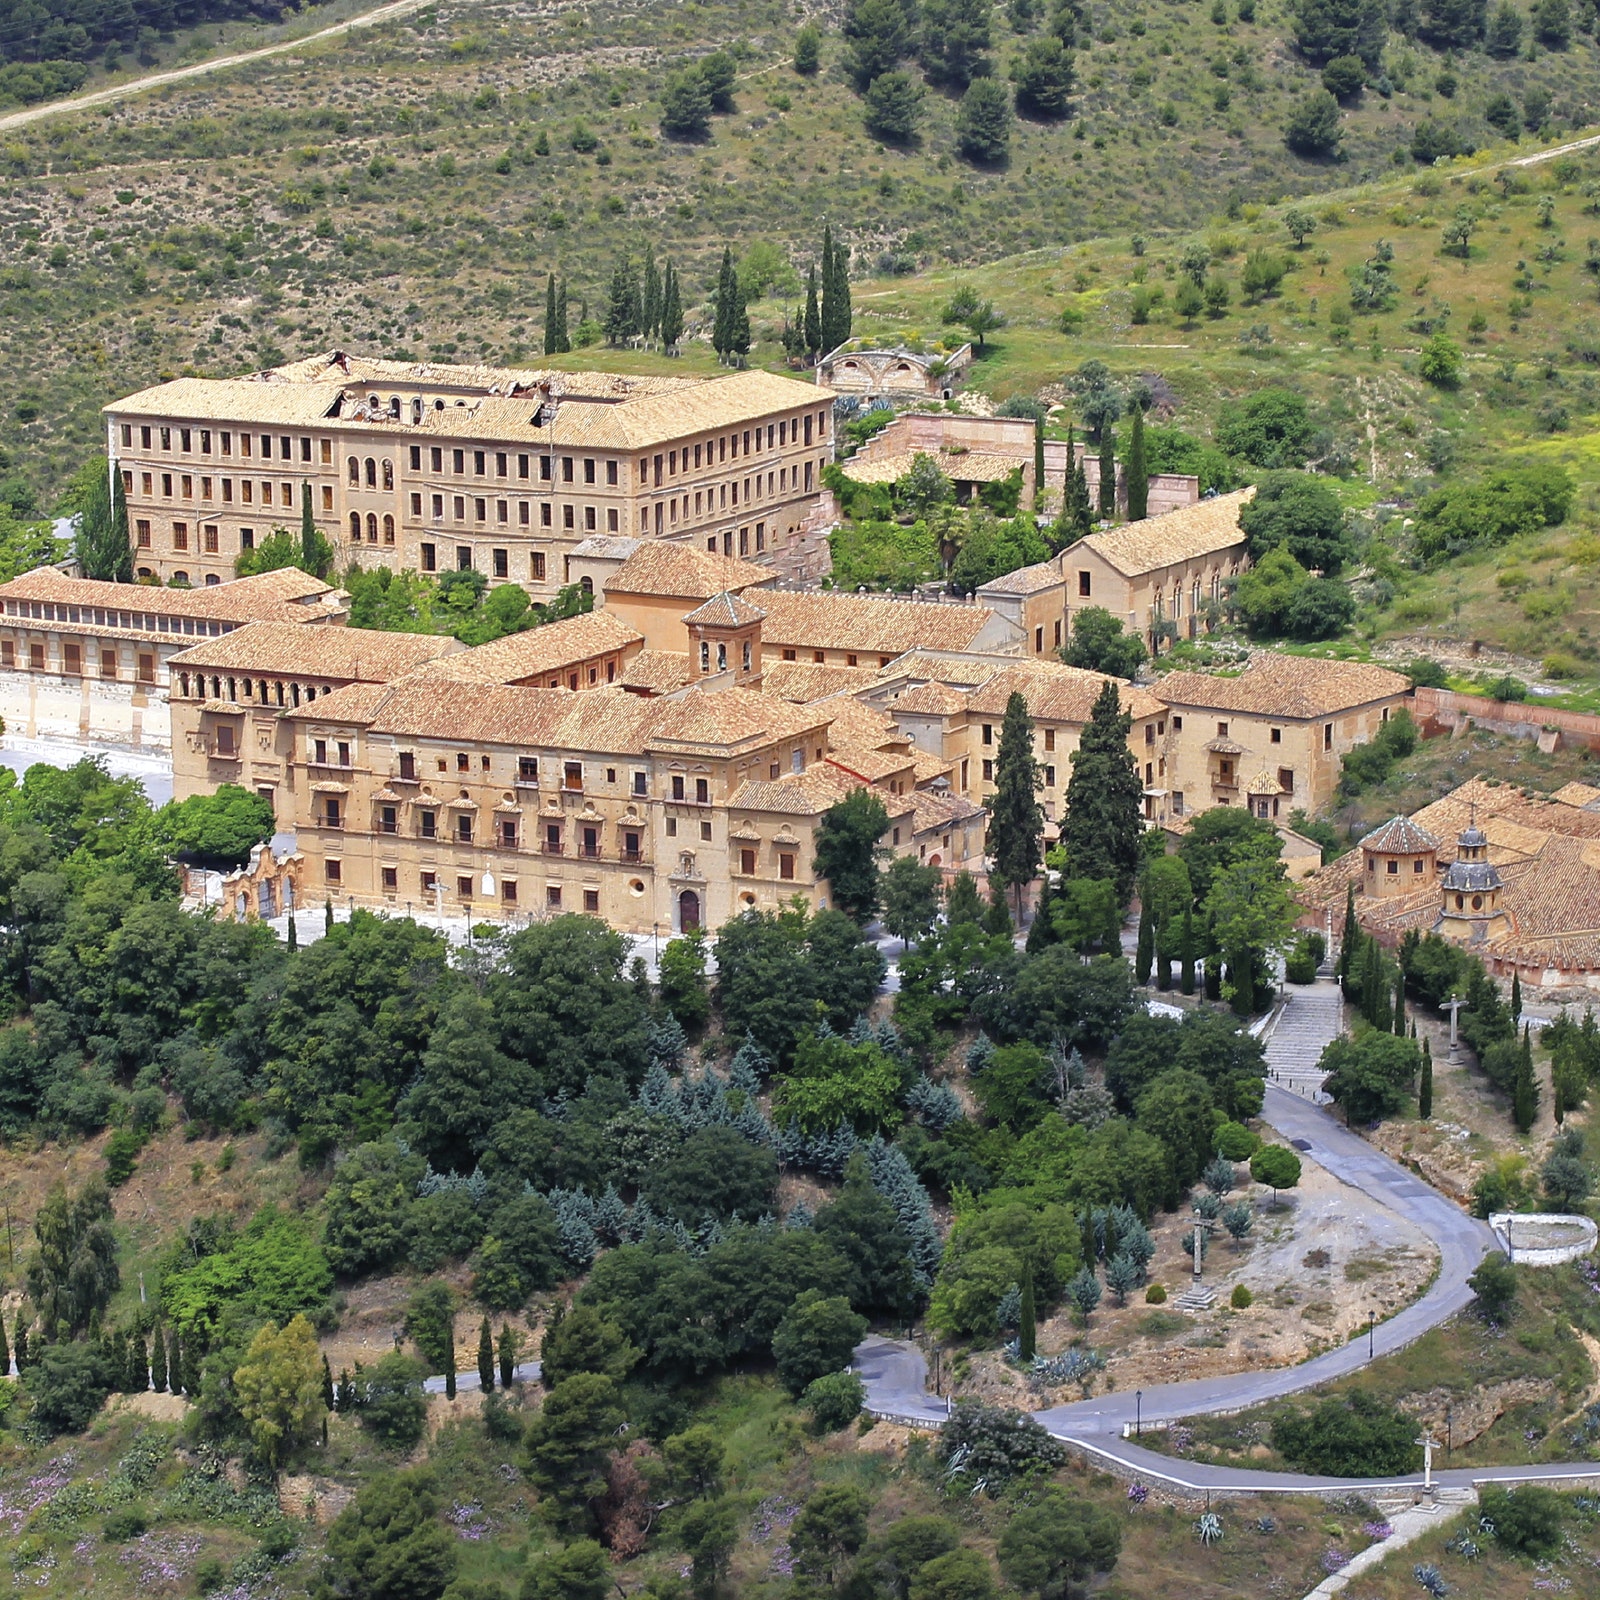 Sacromonte Abbey in Spain